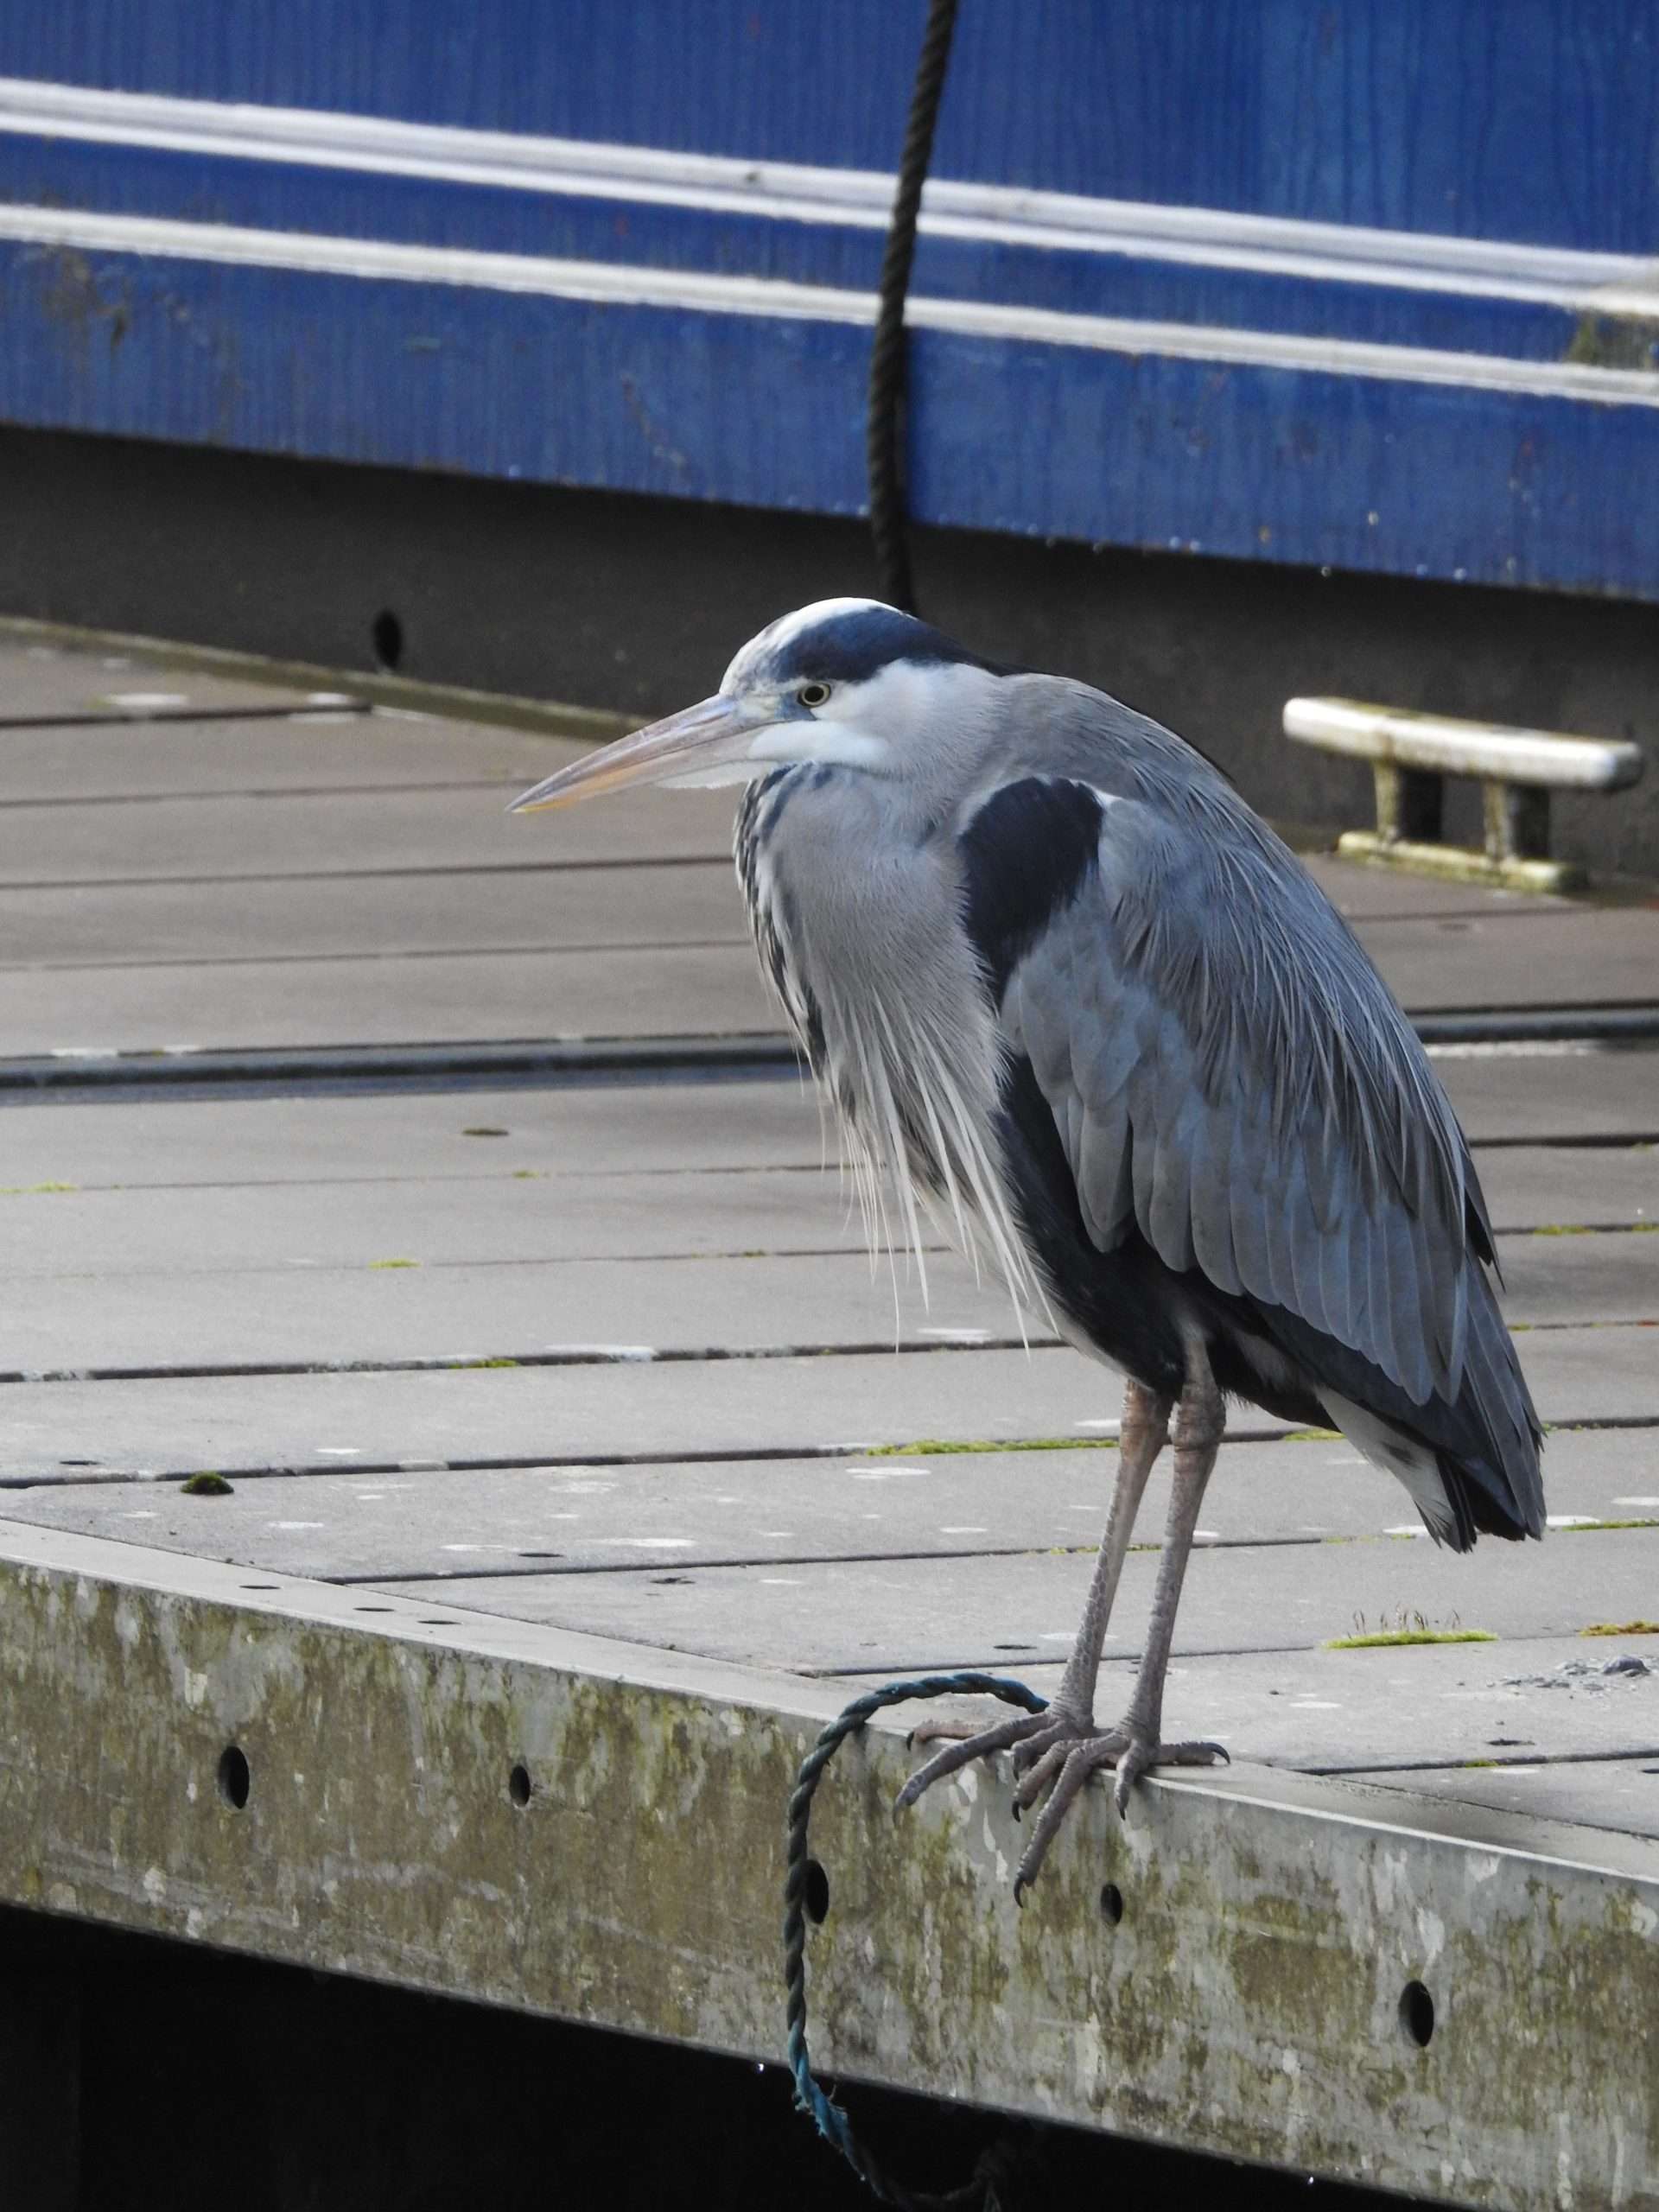 A Heron standing on pontoon